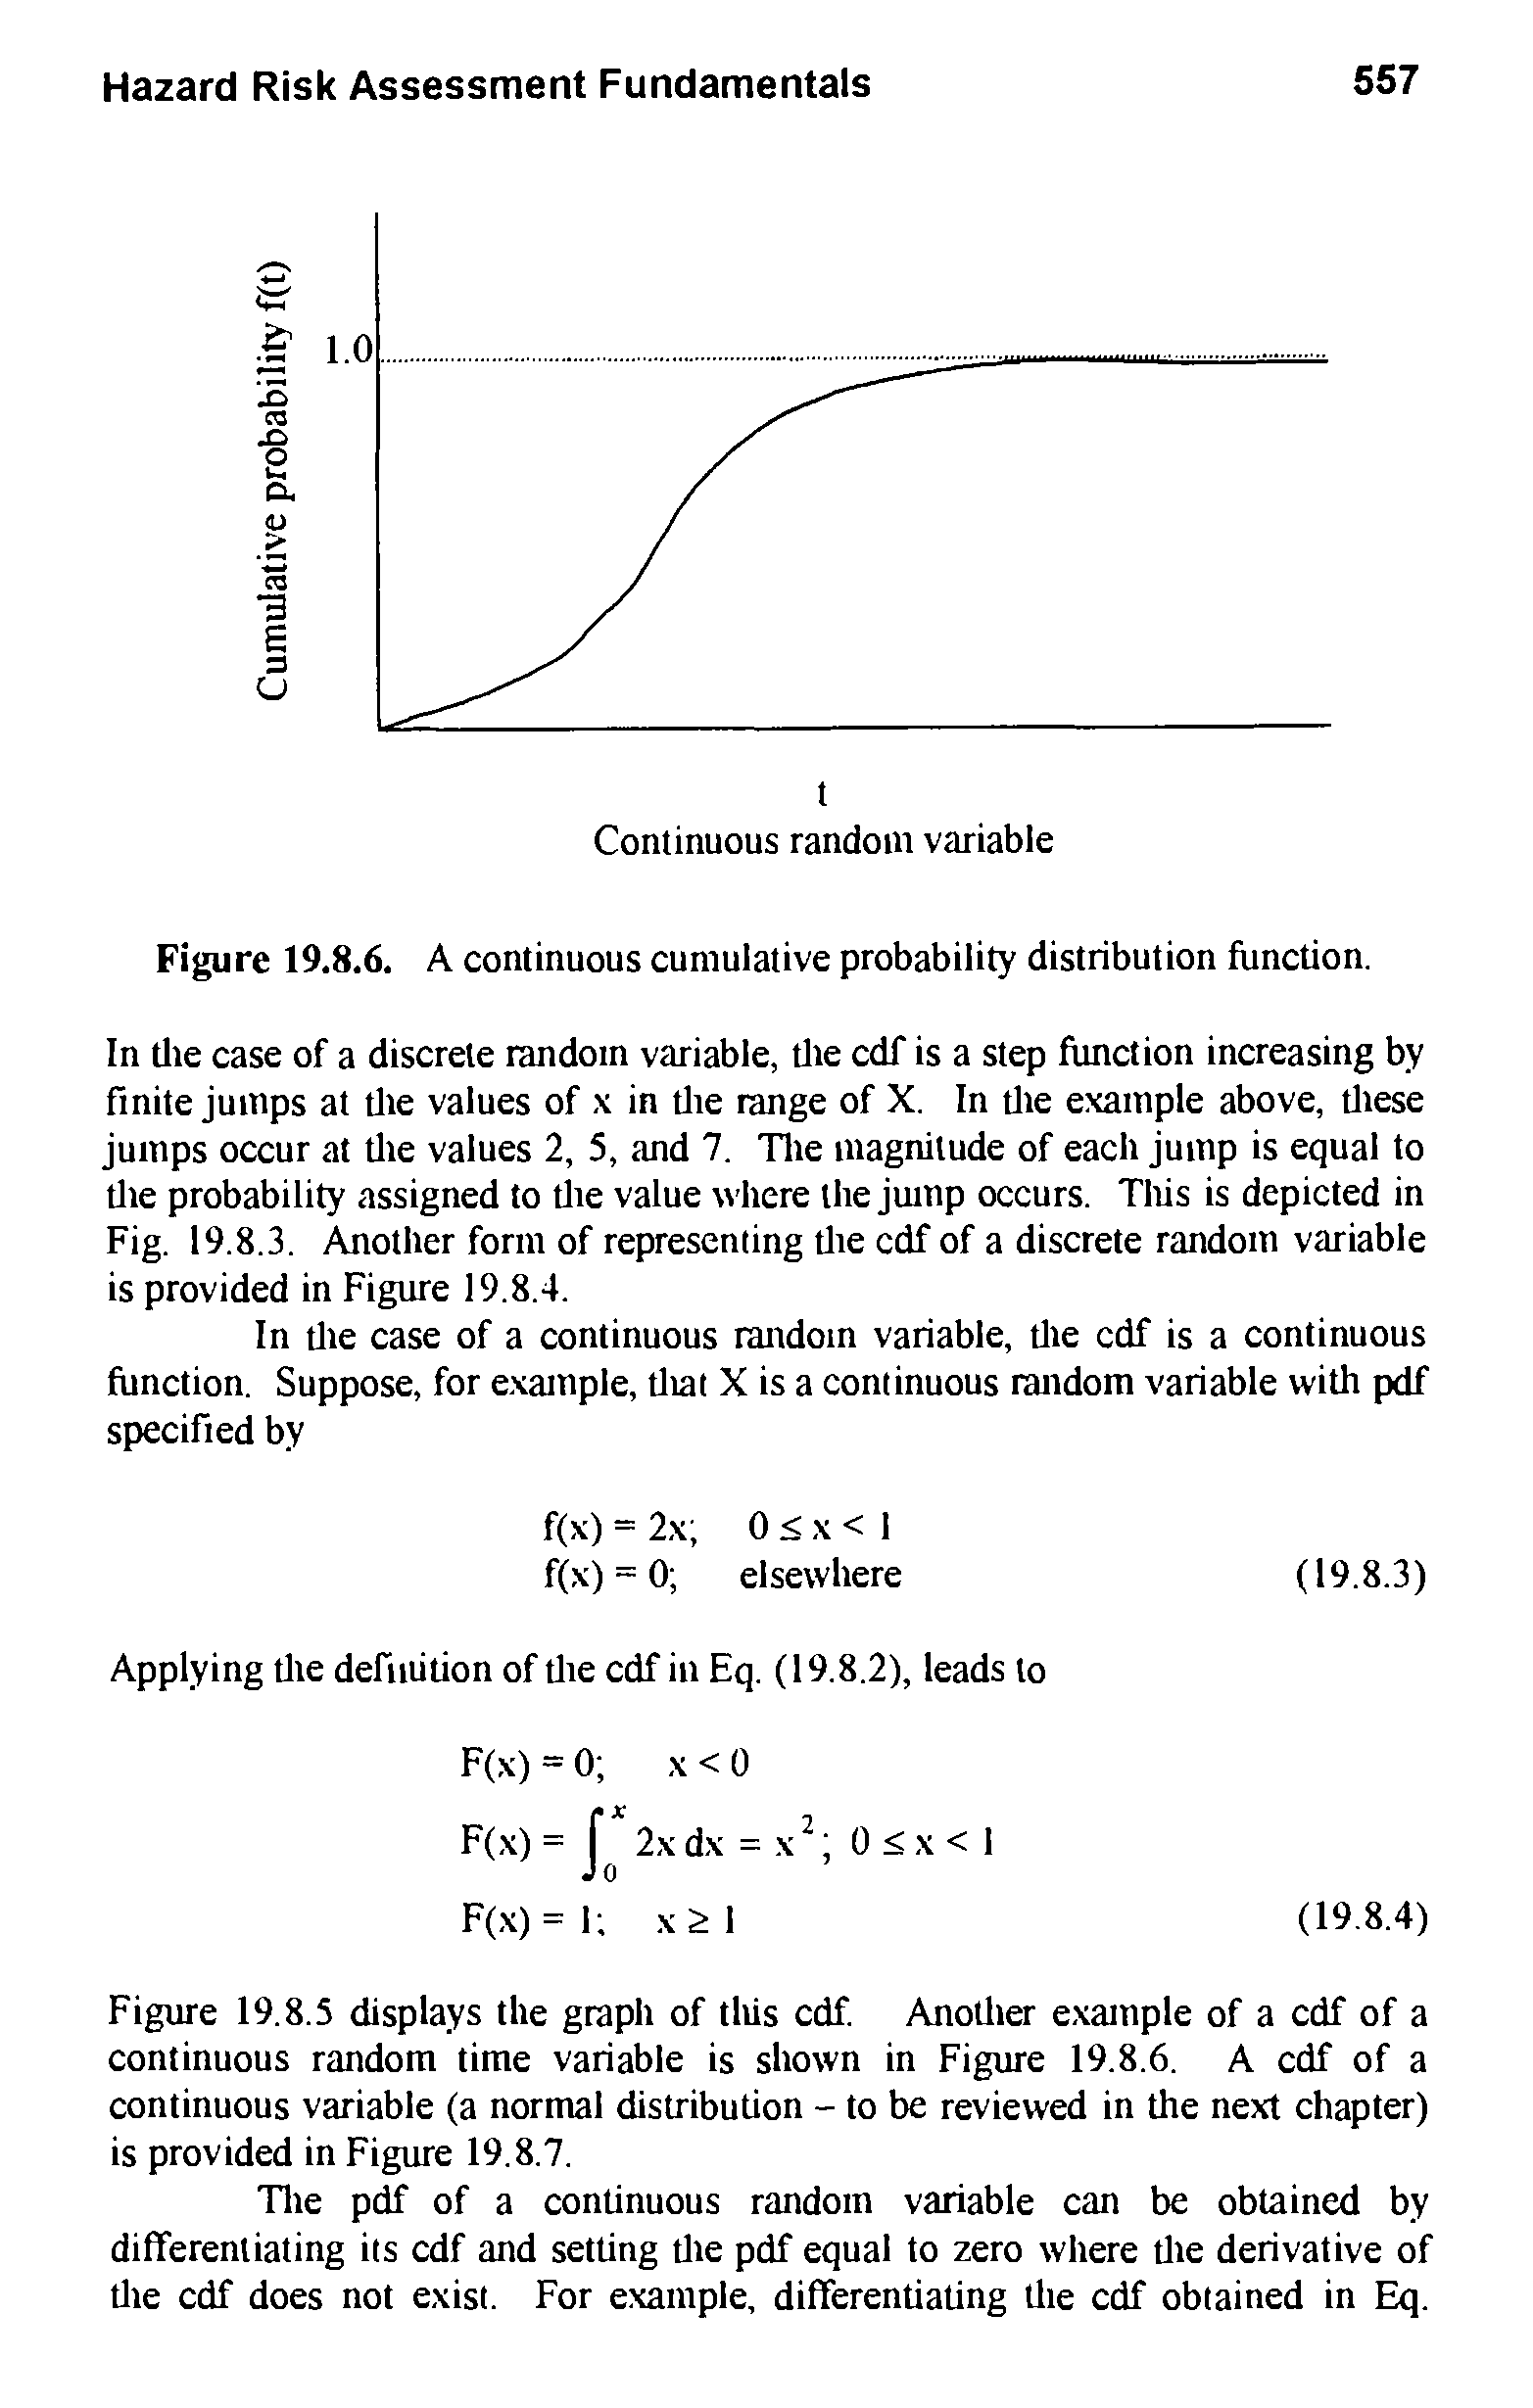 Figure 19.8.6. A continuous cumulative probability distribution function.